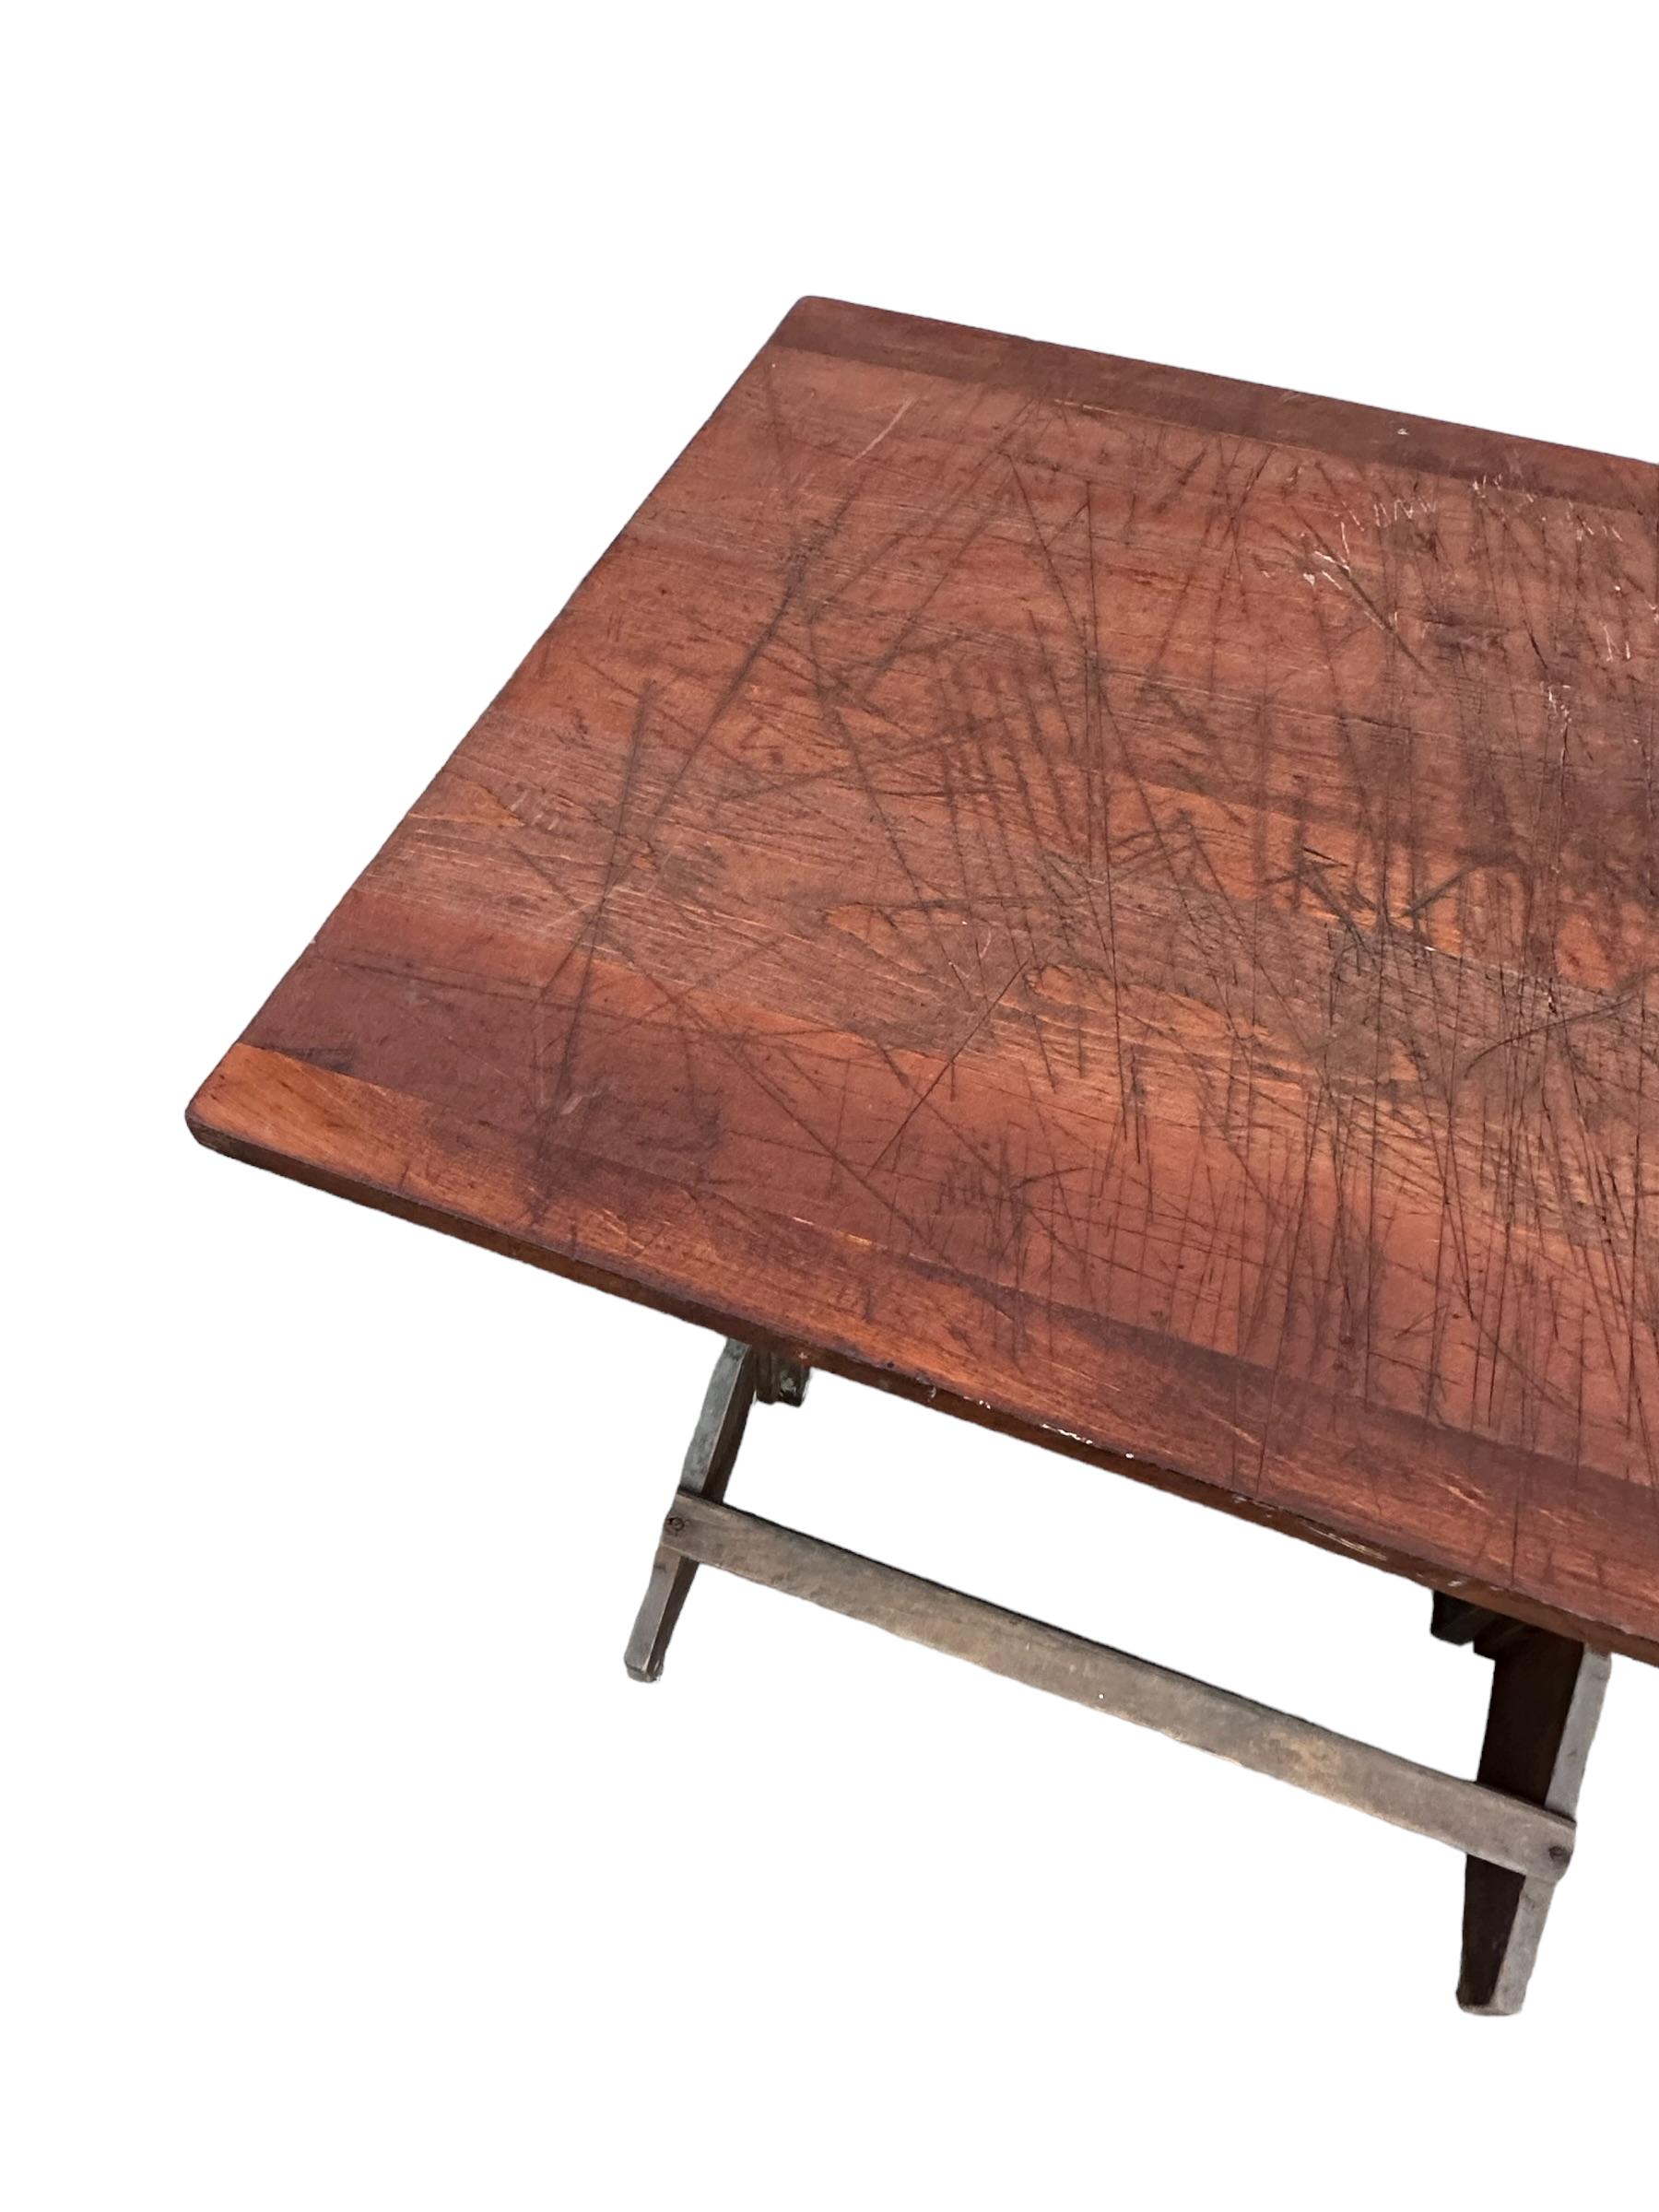 American Craftsman Anco Bilt Antique Solid Wood Adjustable Drafting Table